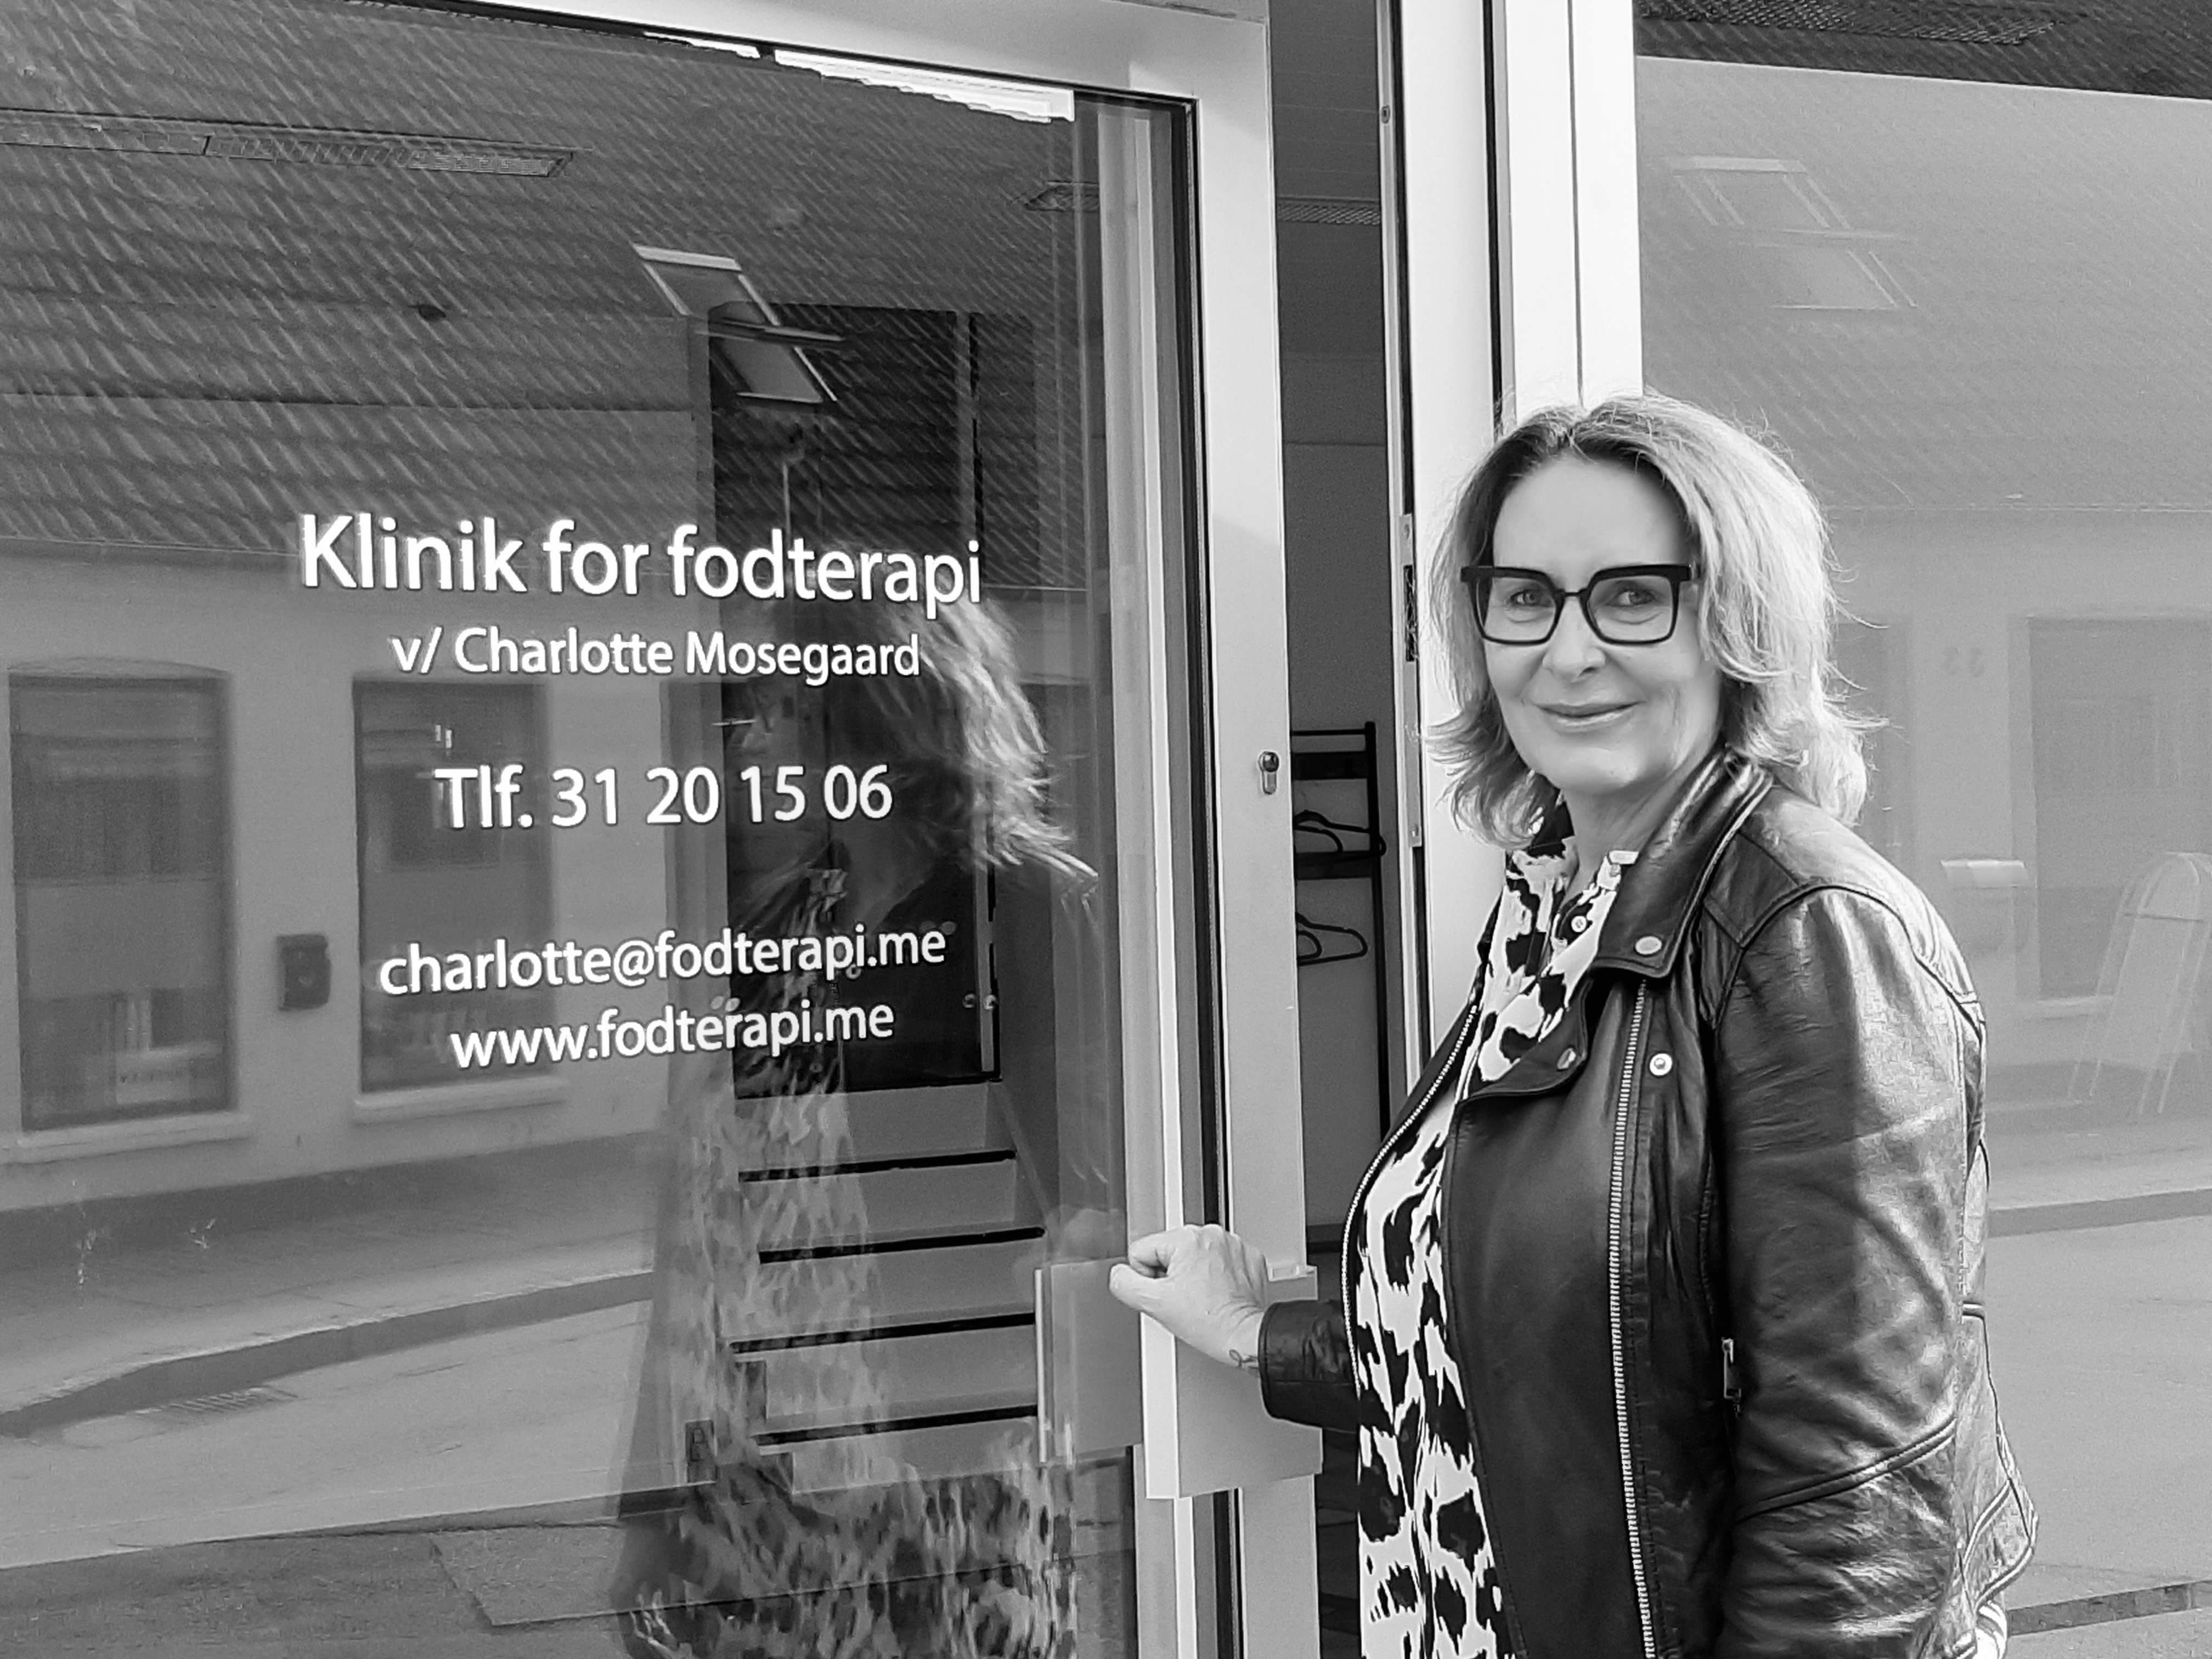 Klinik for fodterapi v/ statsautoriseret Charlotte Holbæk